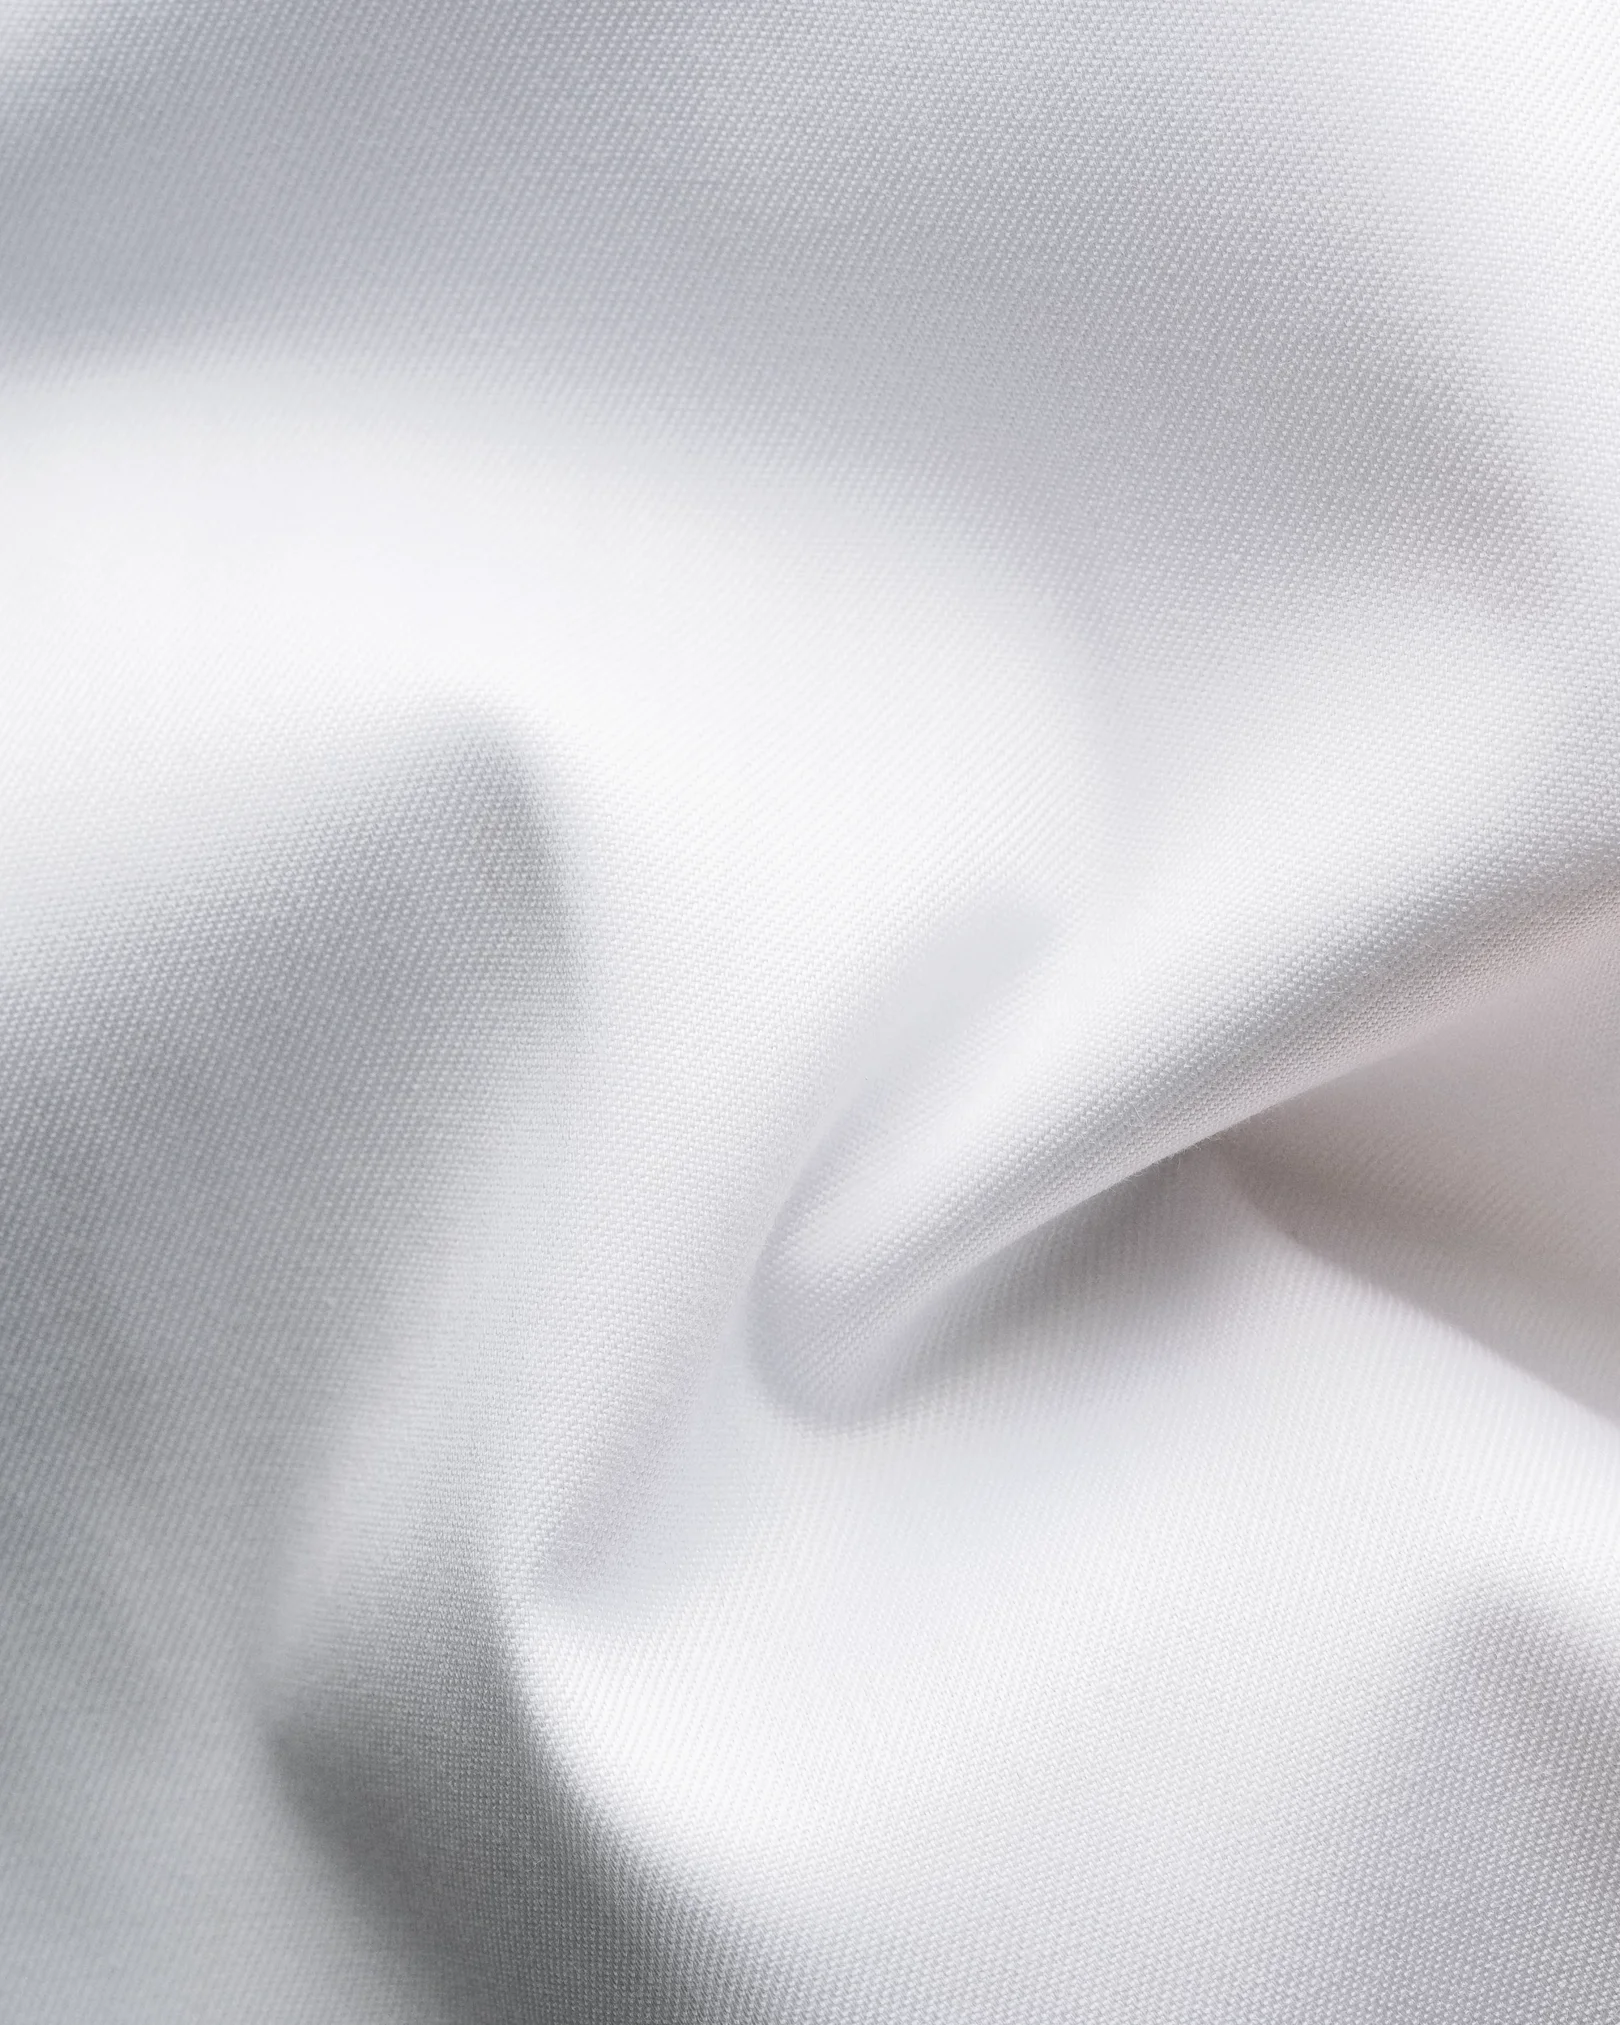 Eton - white signature twill embroidery shirt